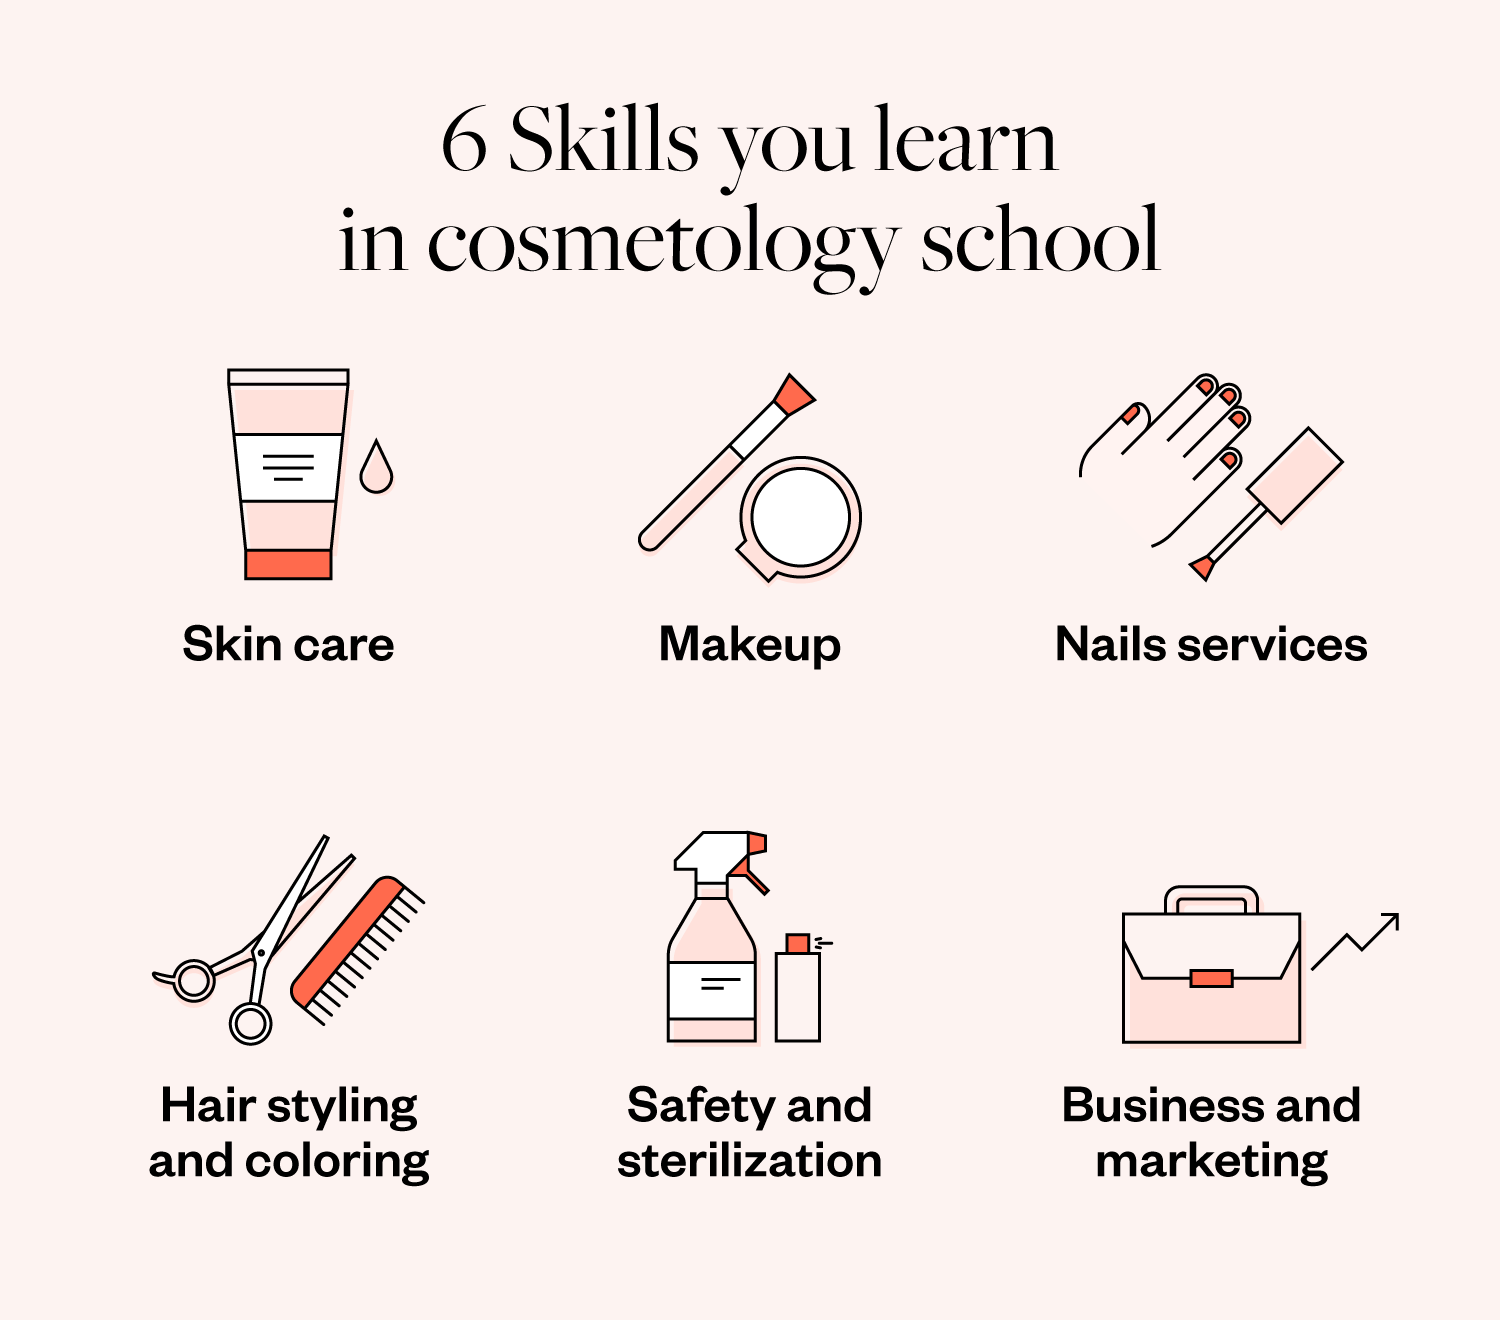 01-Skills-you-learn-in-cosmetology-school